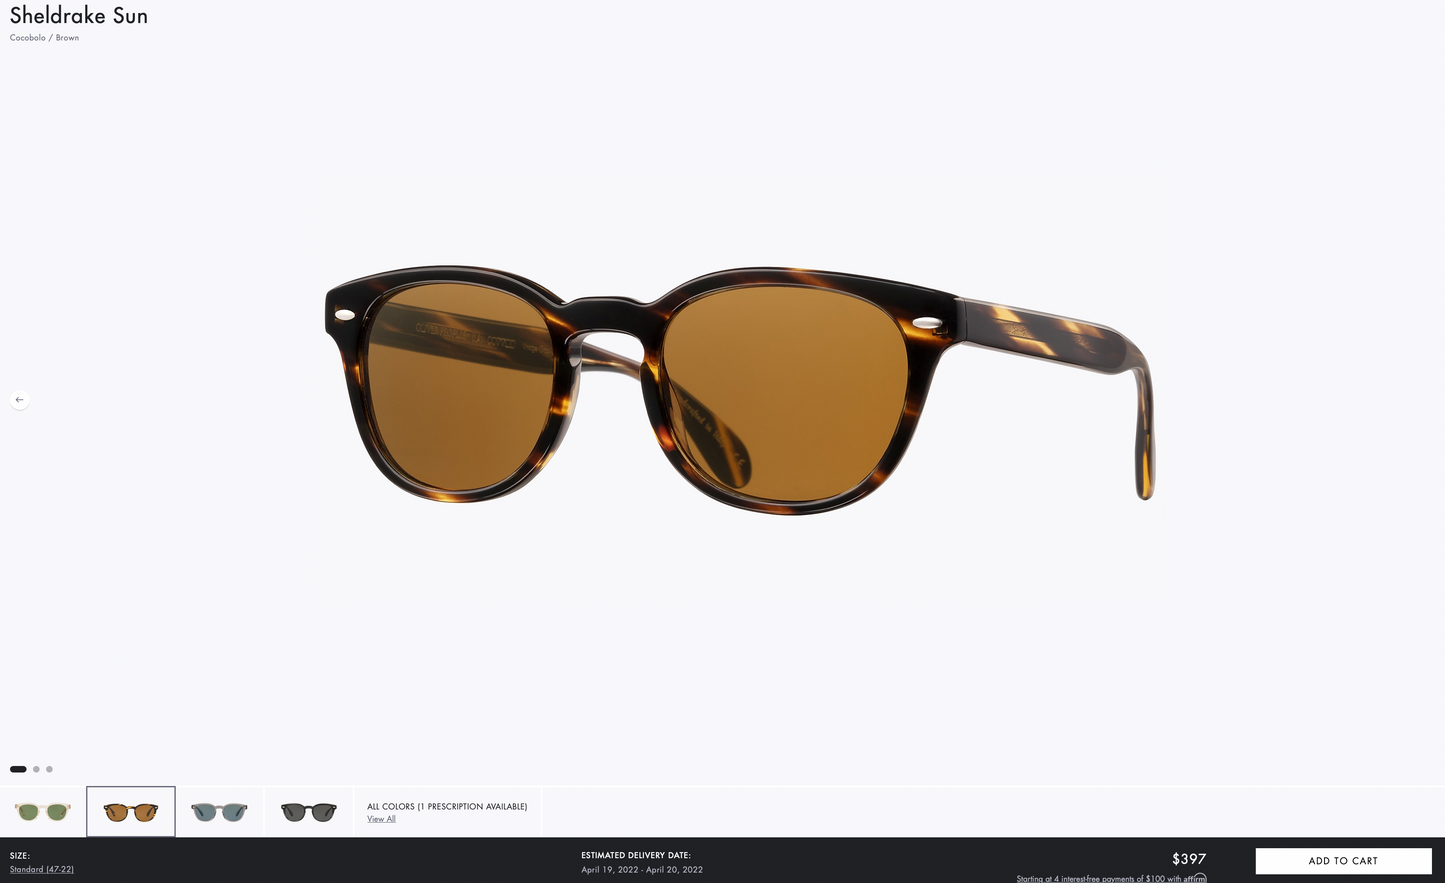 Oliver Peoples SHELDRAKE SUN OV 5036S COCOBOLO/BROWN Sunglasses 47mm